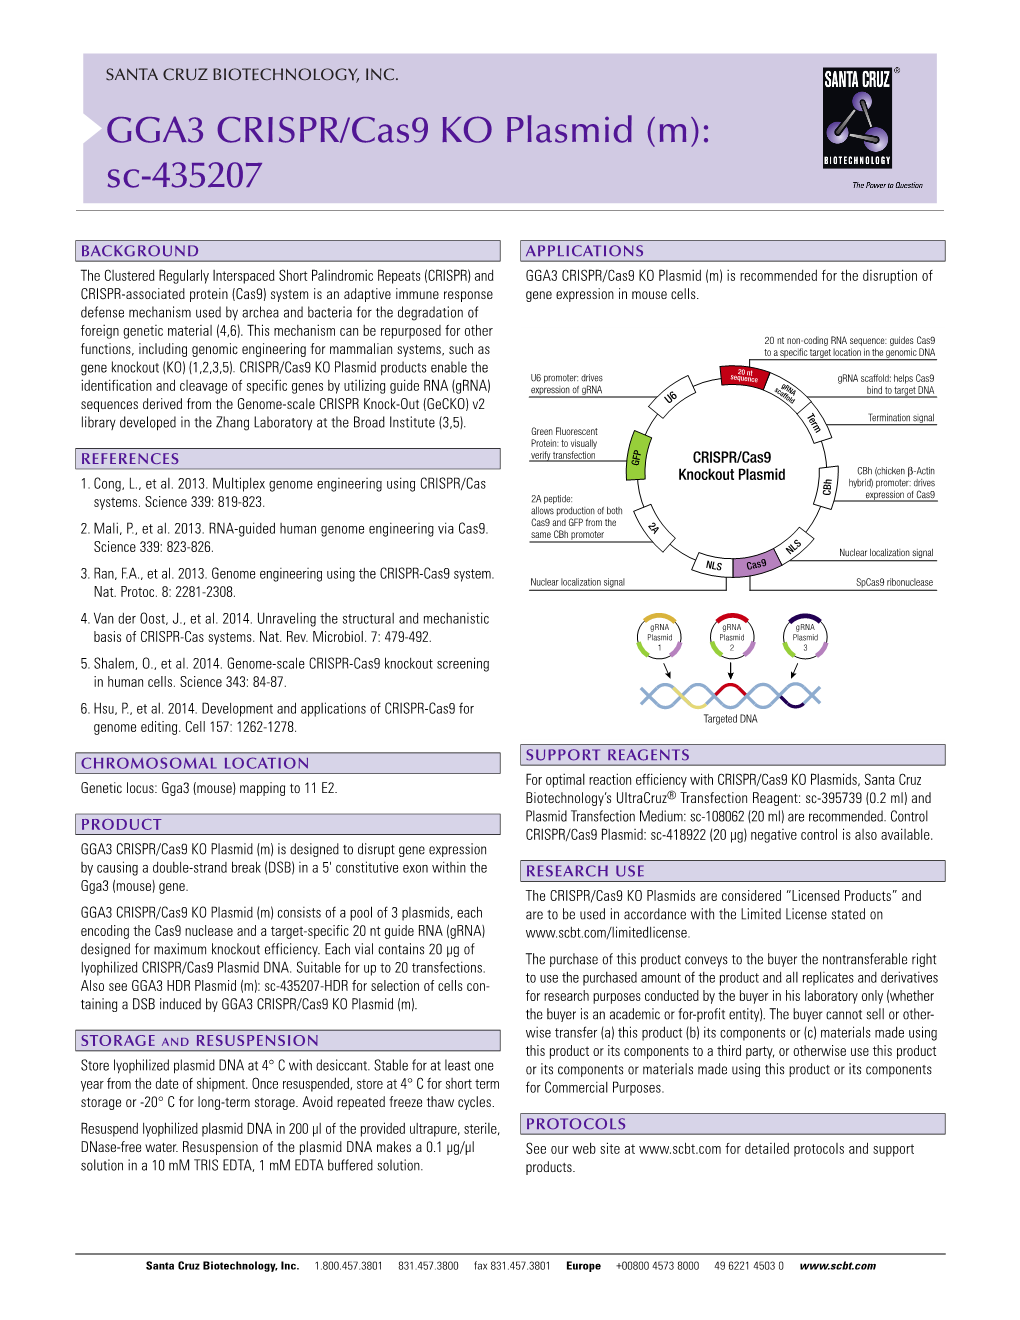 GGA3 CRISPR/Cas9 KO Plasmid (M): Sc-435207